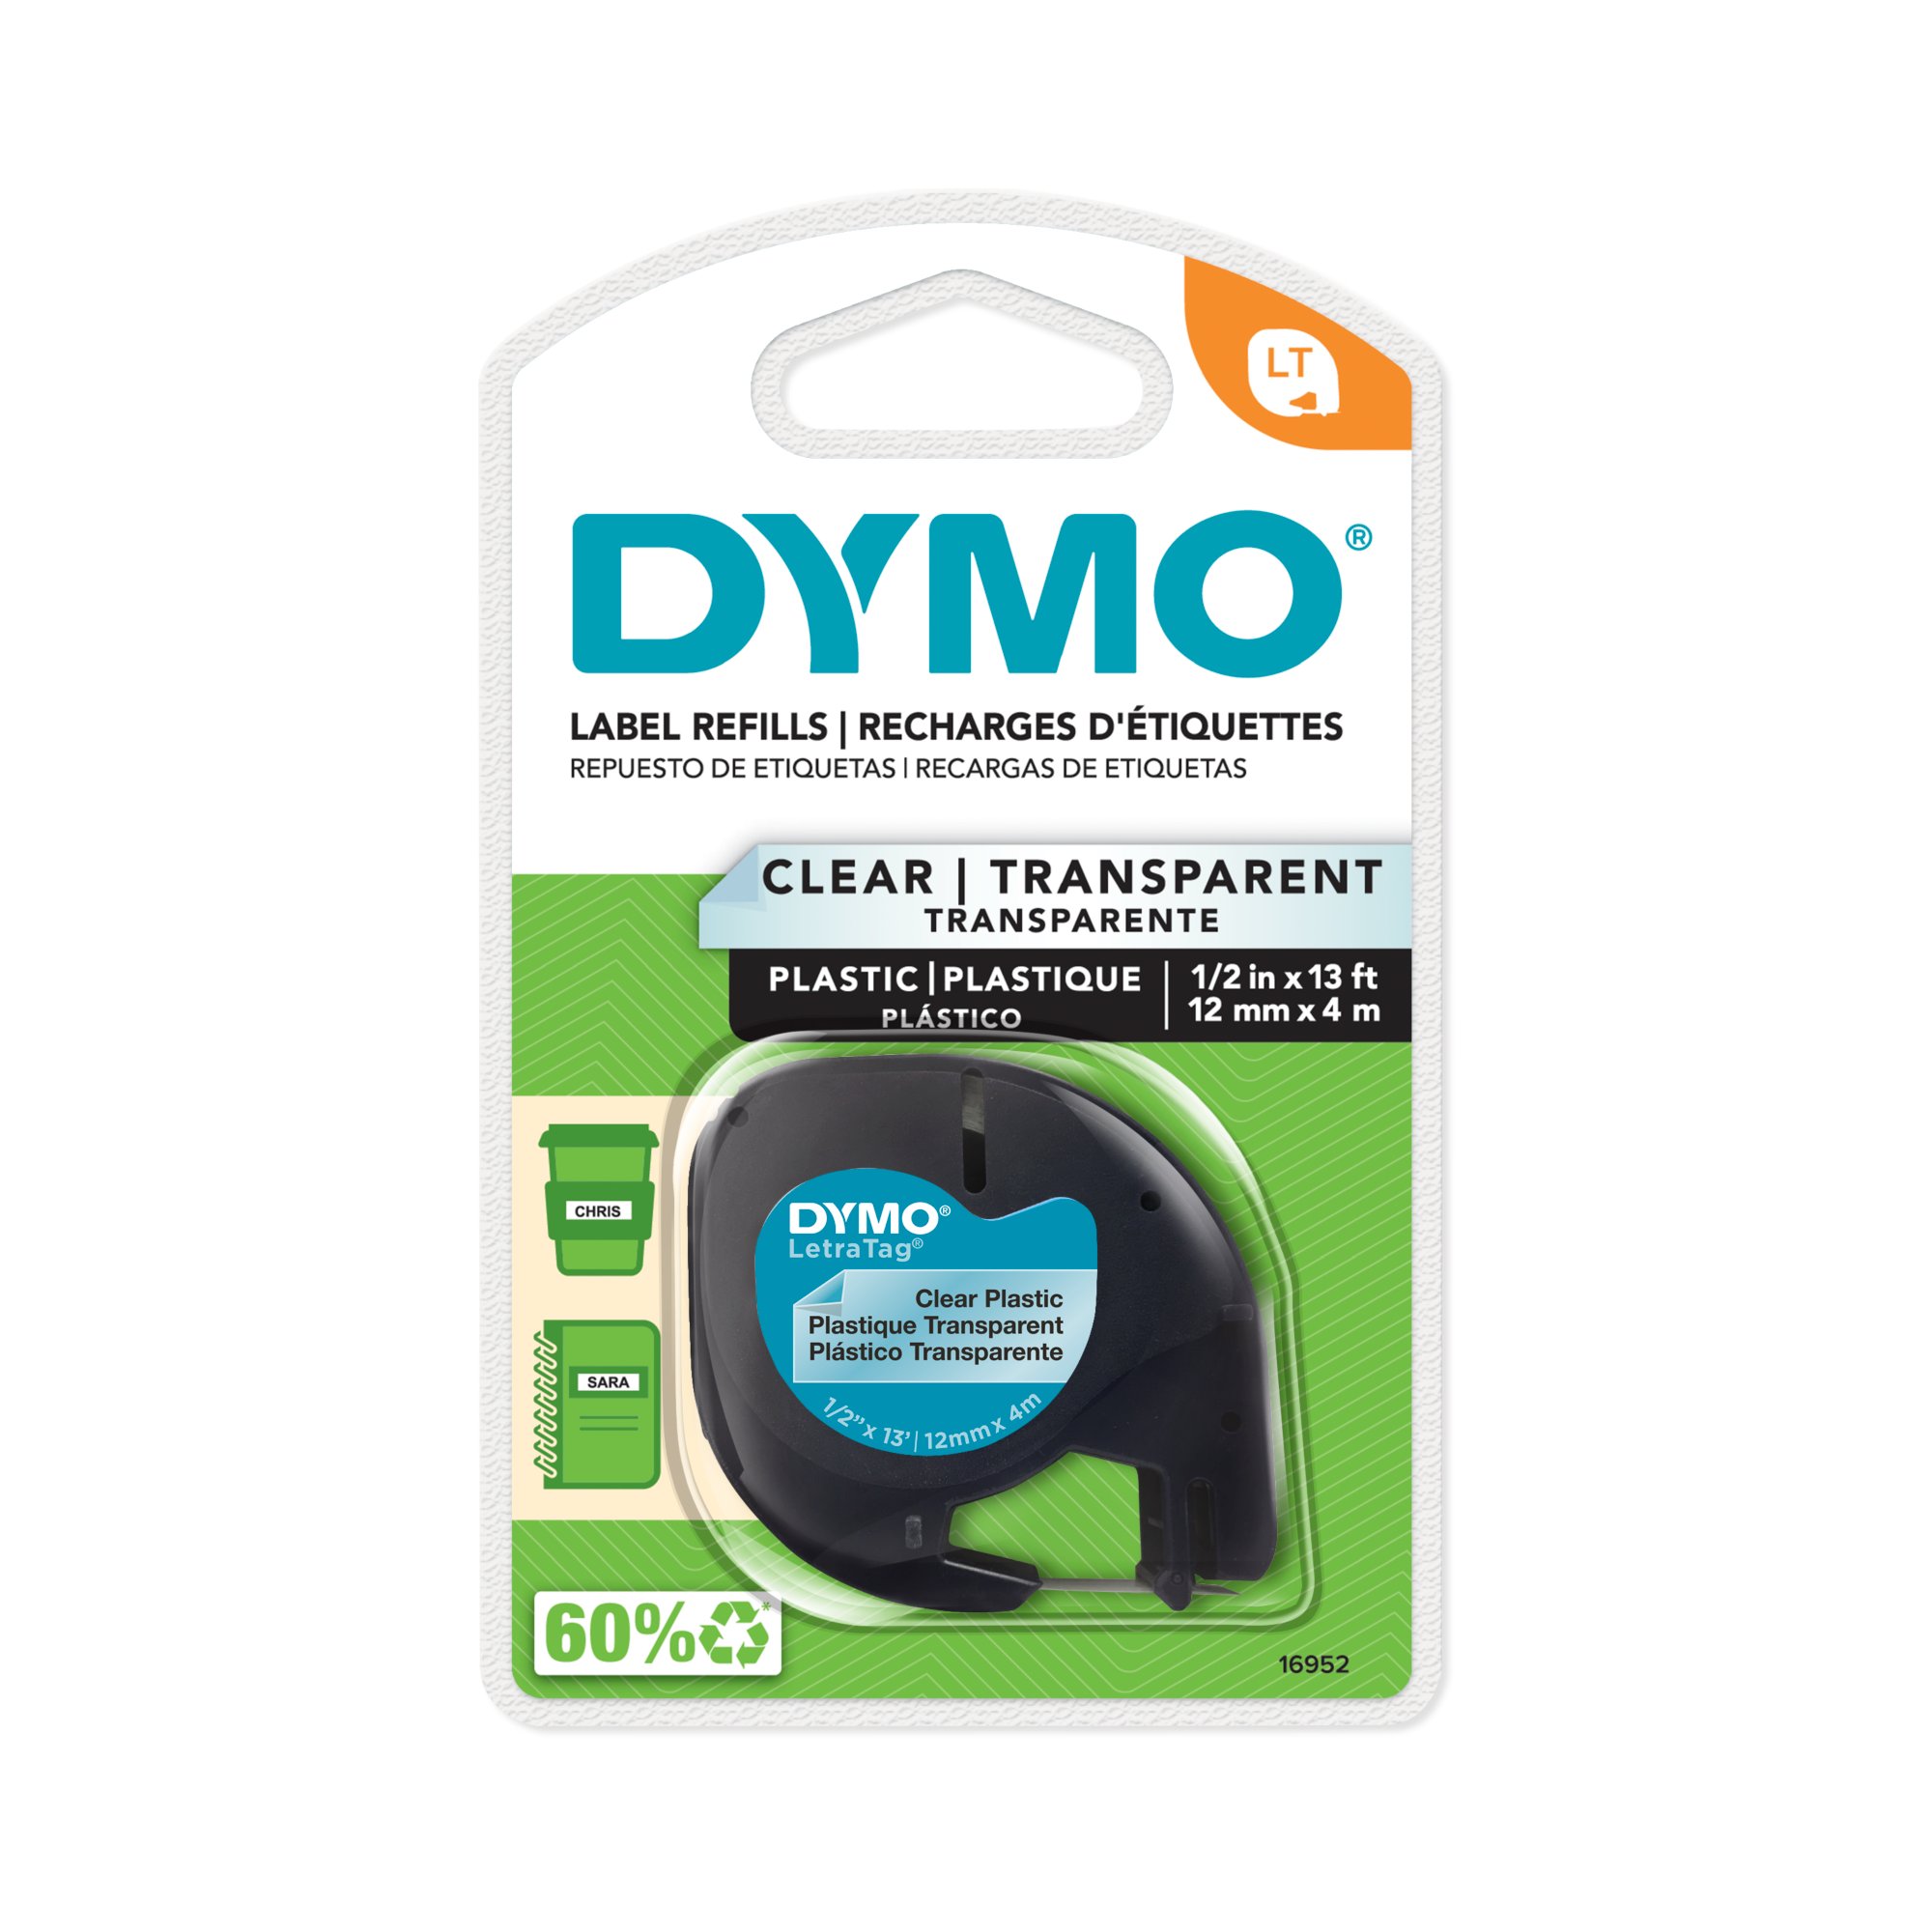 7PK Dymo Letra tag Refills Plastic 12mm Label Tape 91330 91331 16952 91332 91333 